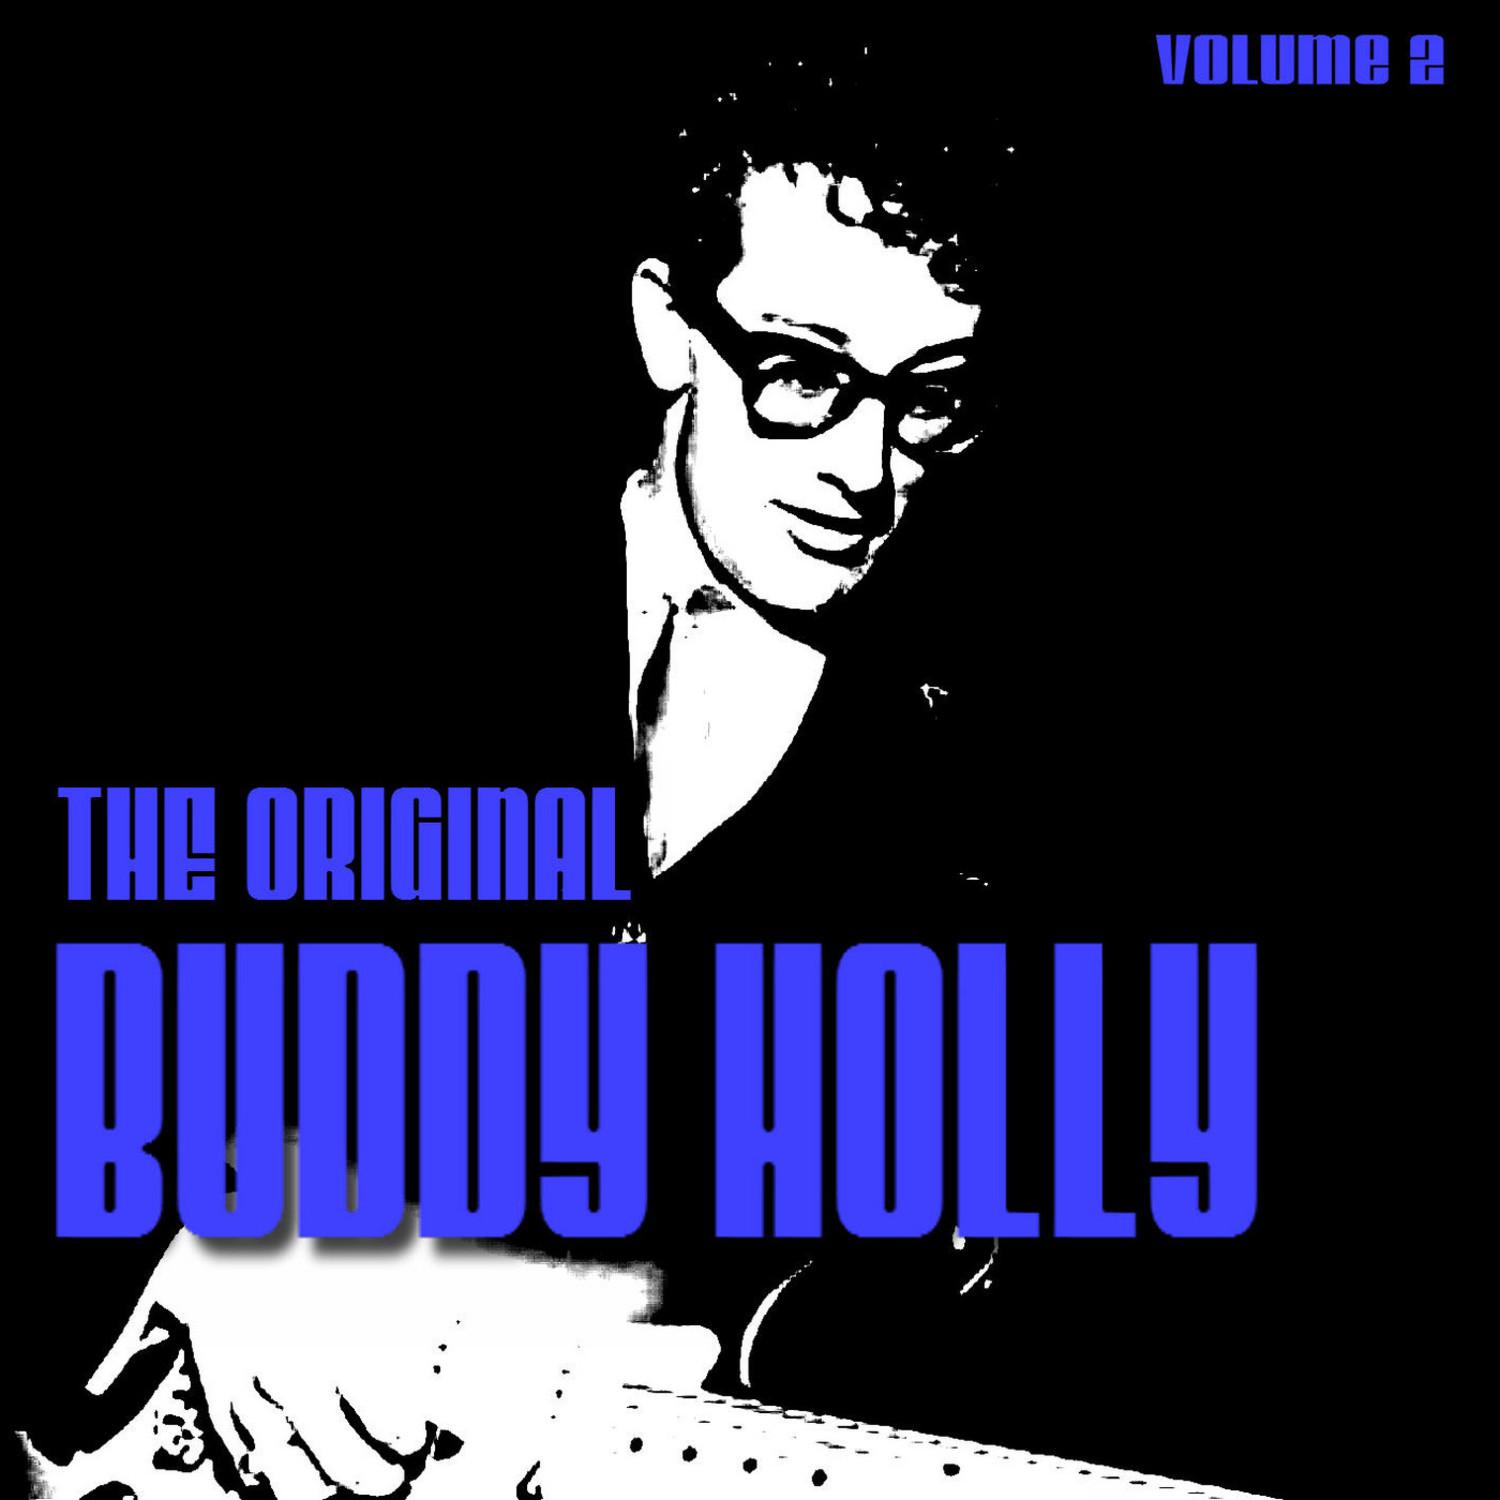 The Original Buddy Holly Vol. 2